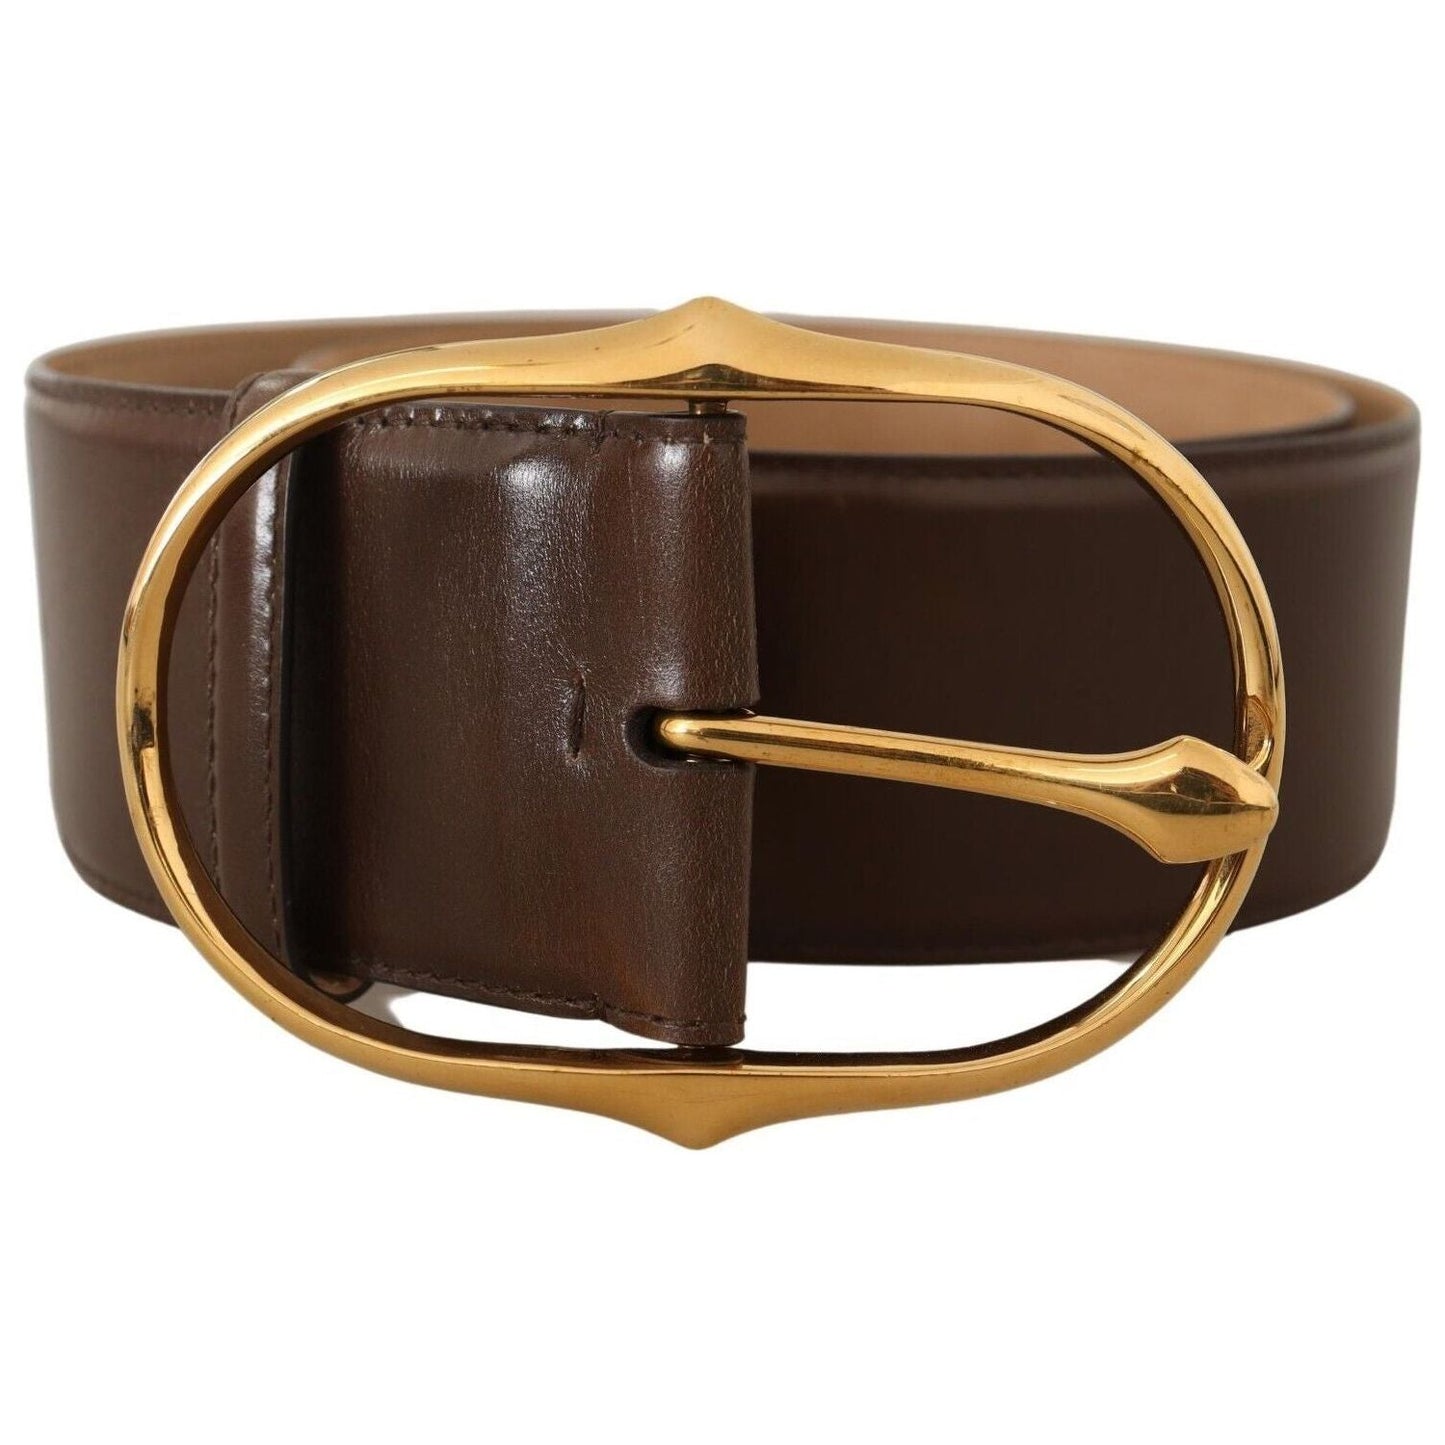 Dolce & Gabbana Elegant Brown Leather Belt with Gold Buckle brown-leather-gold-metal-oval-buckle-belt-7 s-l1600-2-287-cfbfd77d-209.jpg